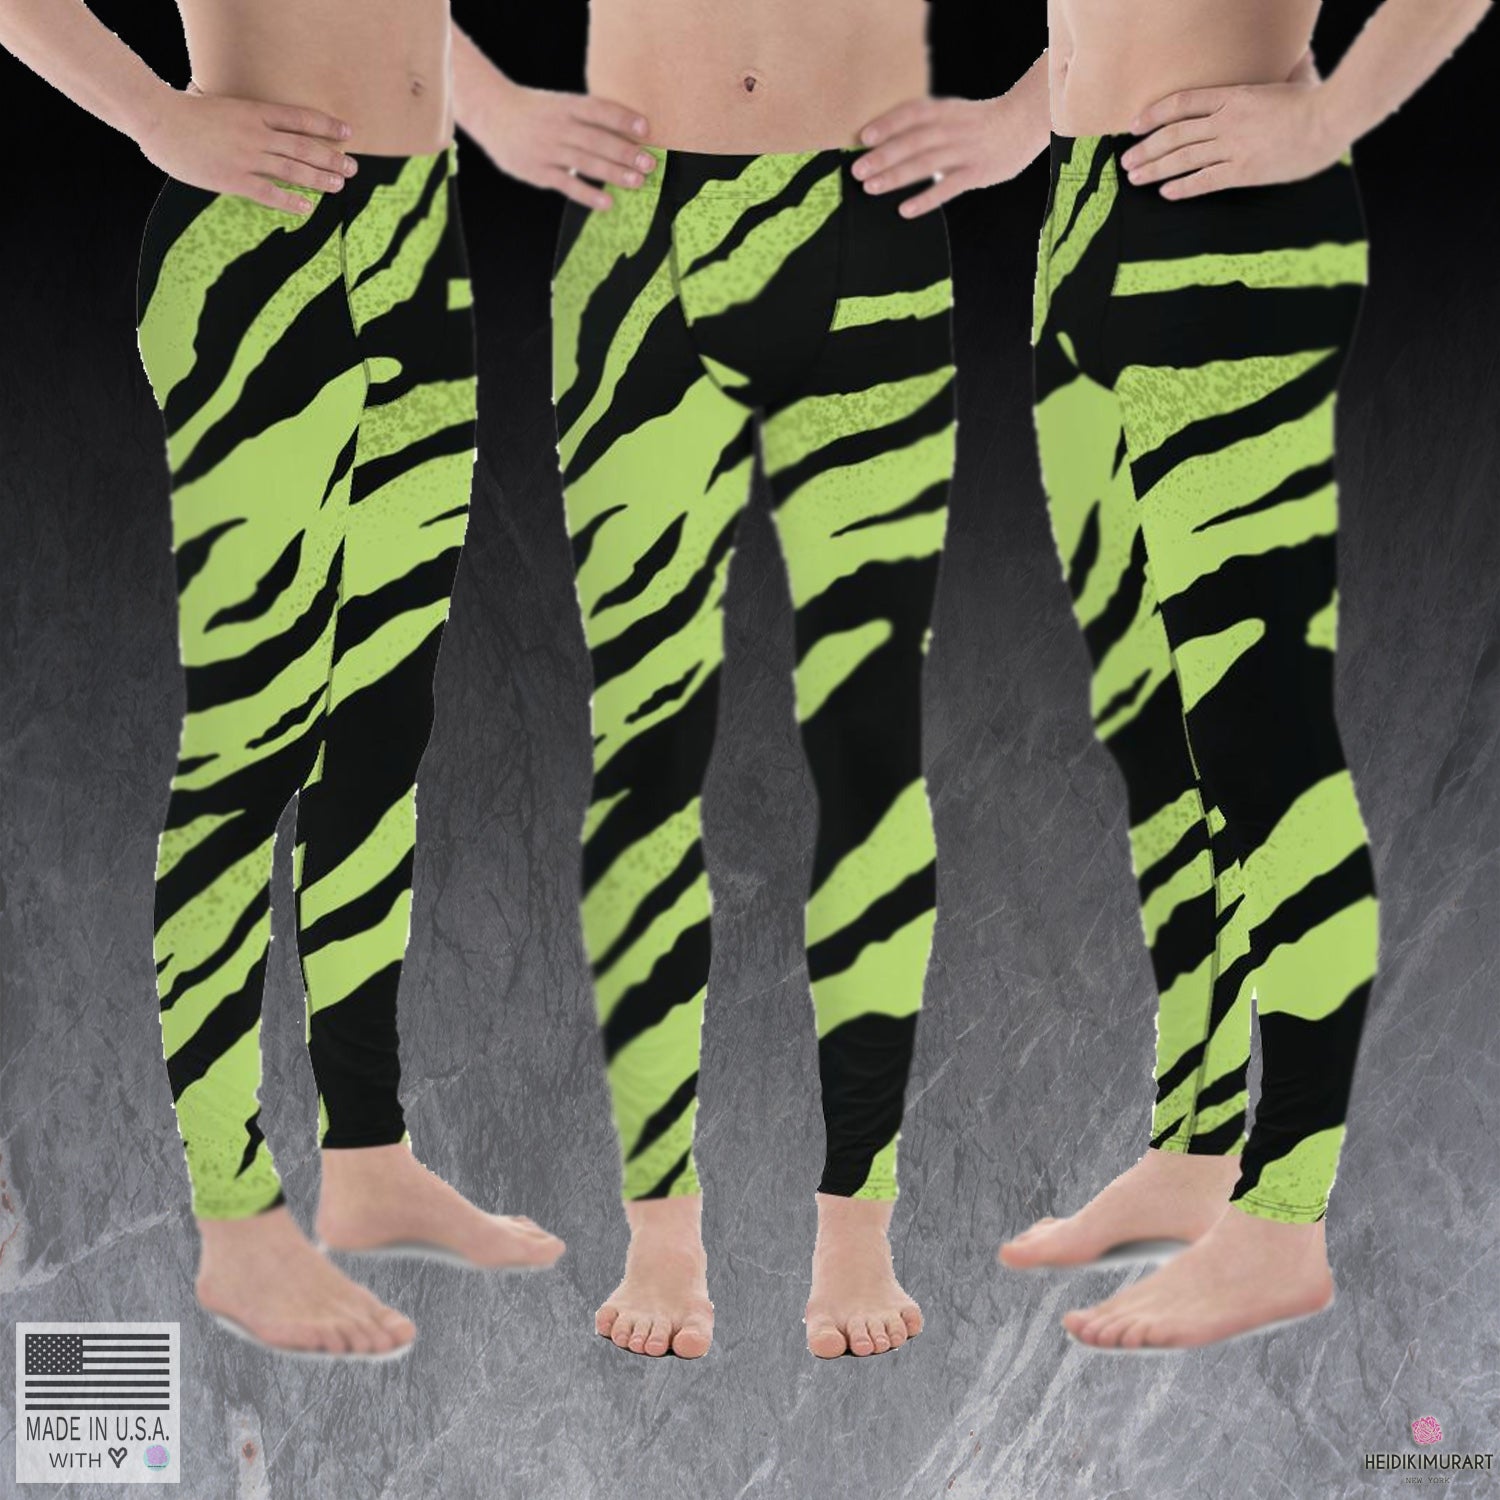 Zebra Leggings, Zebra Stretch Pants, Womens Yoga Pants, Animal